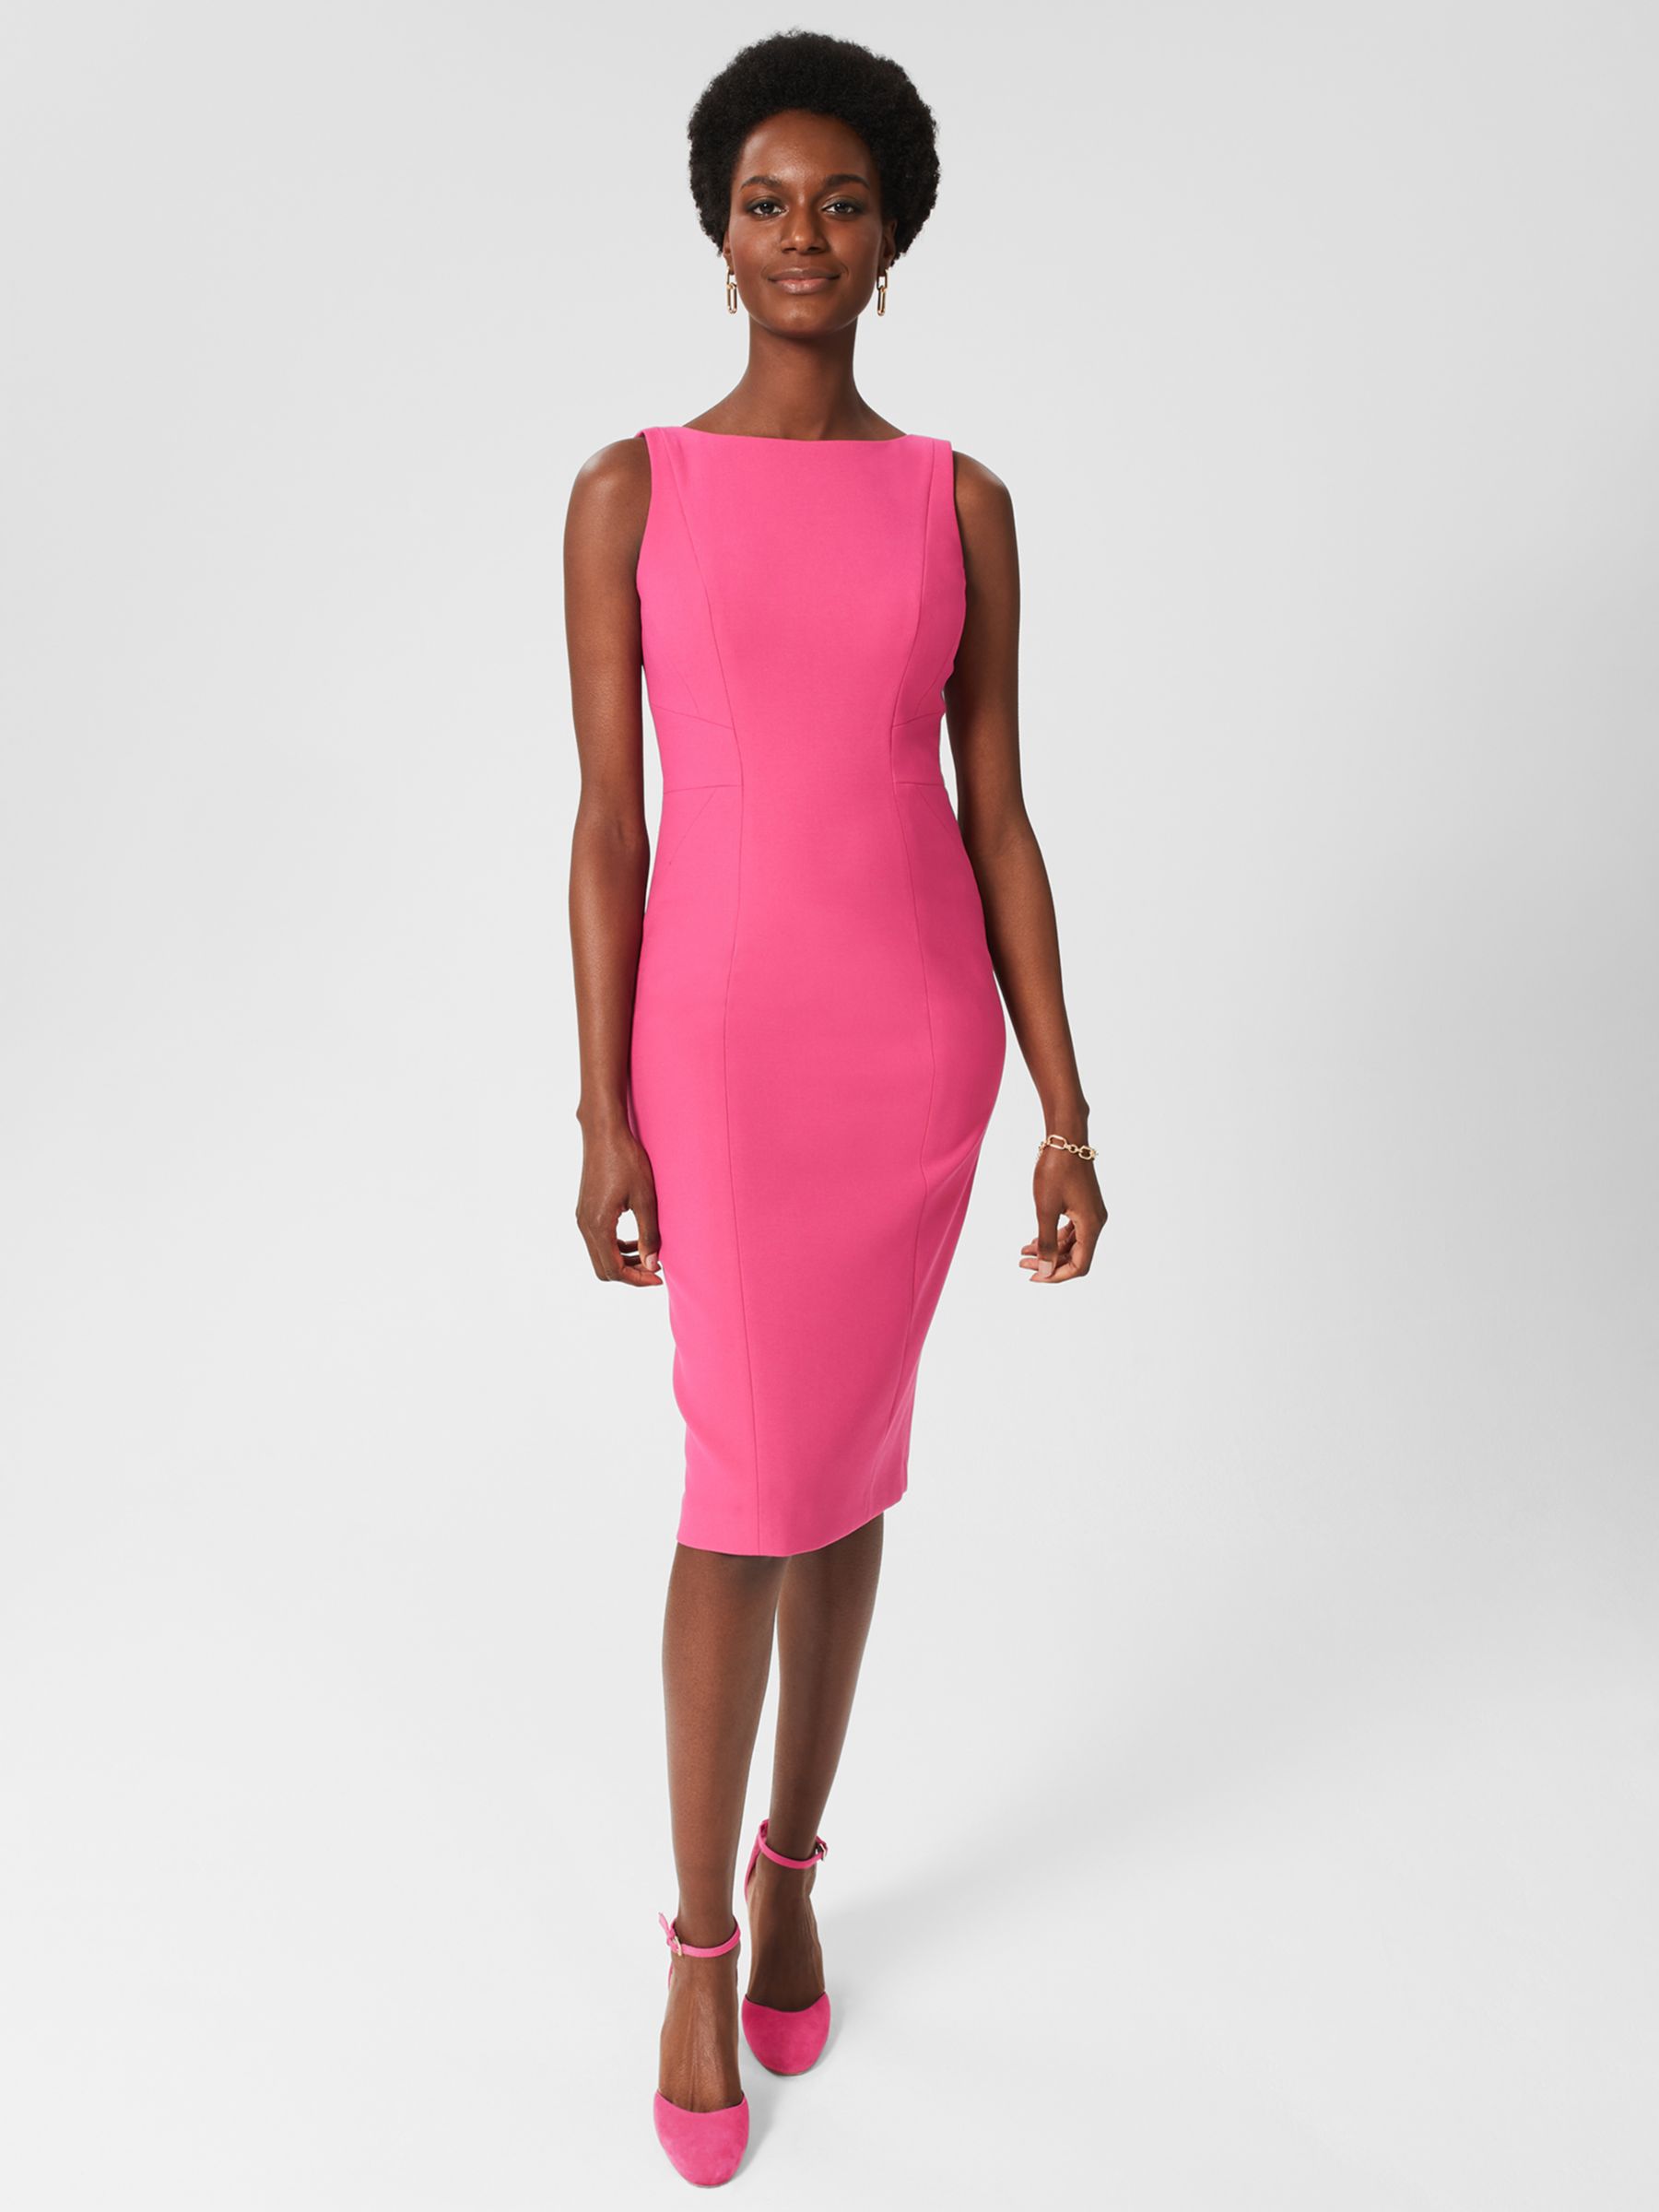 Hobbs Dania Shift Dress, Bright Pink at John Lewis & Partners